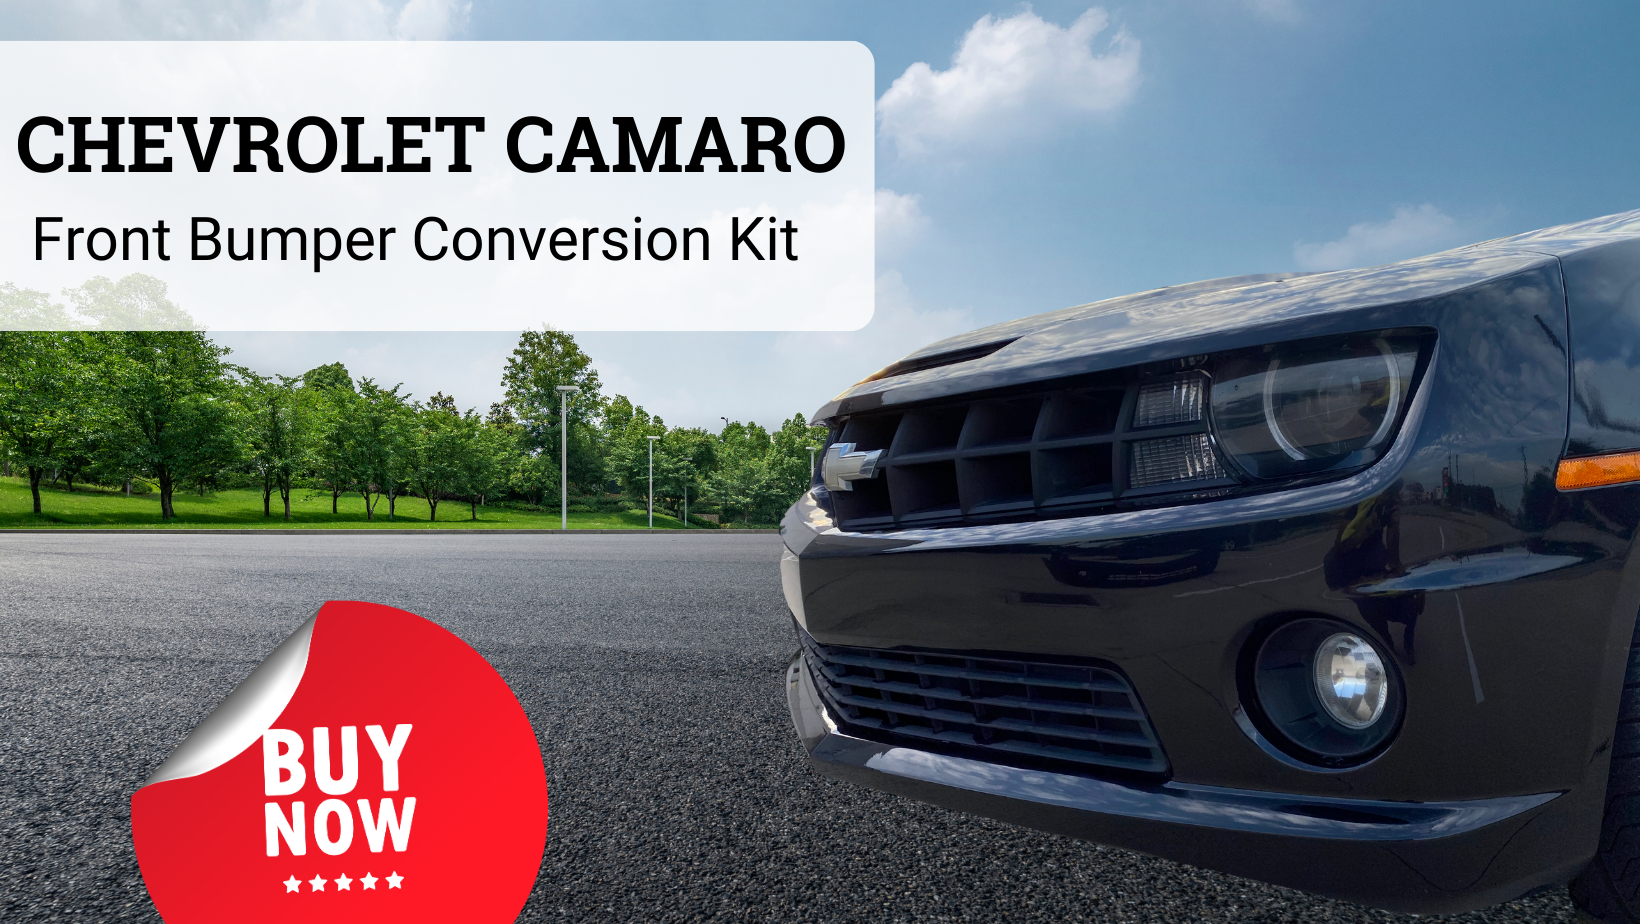 Chevrolet Camaro Front Bumper Conversion Kit